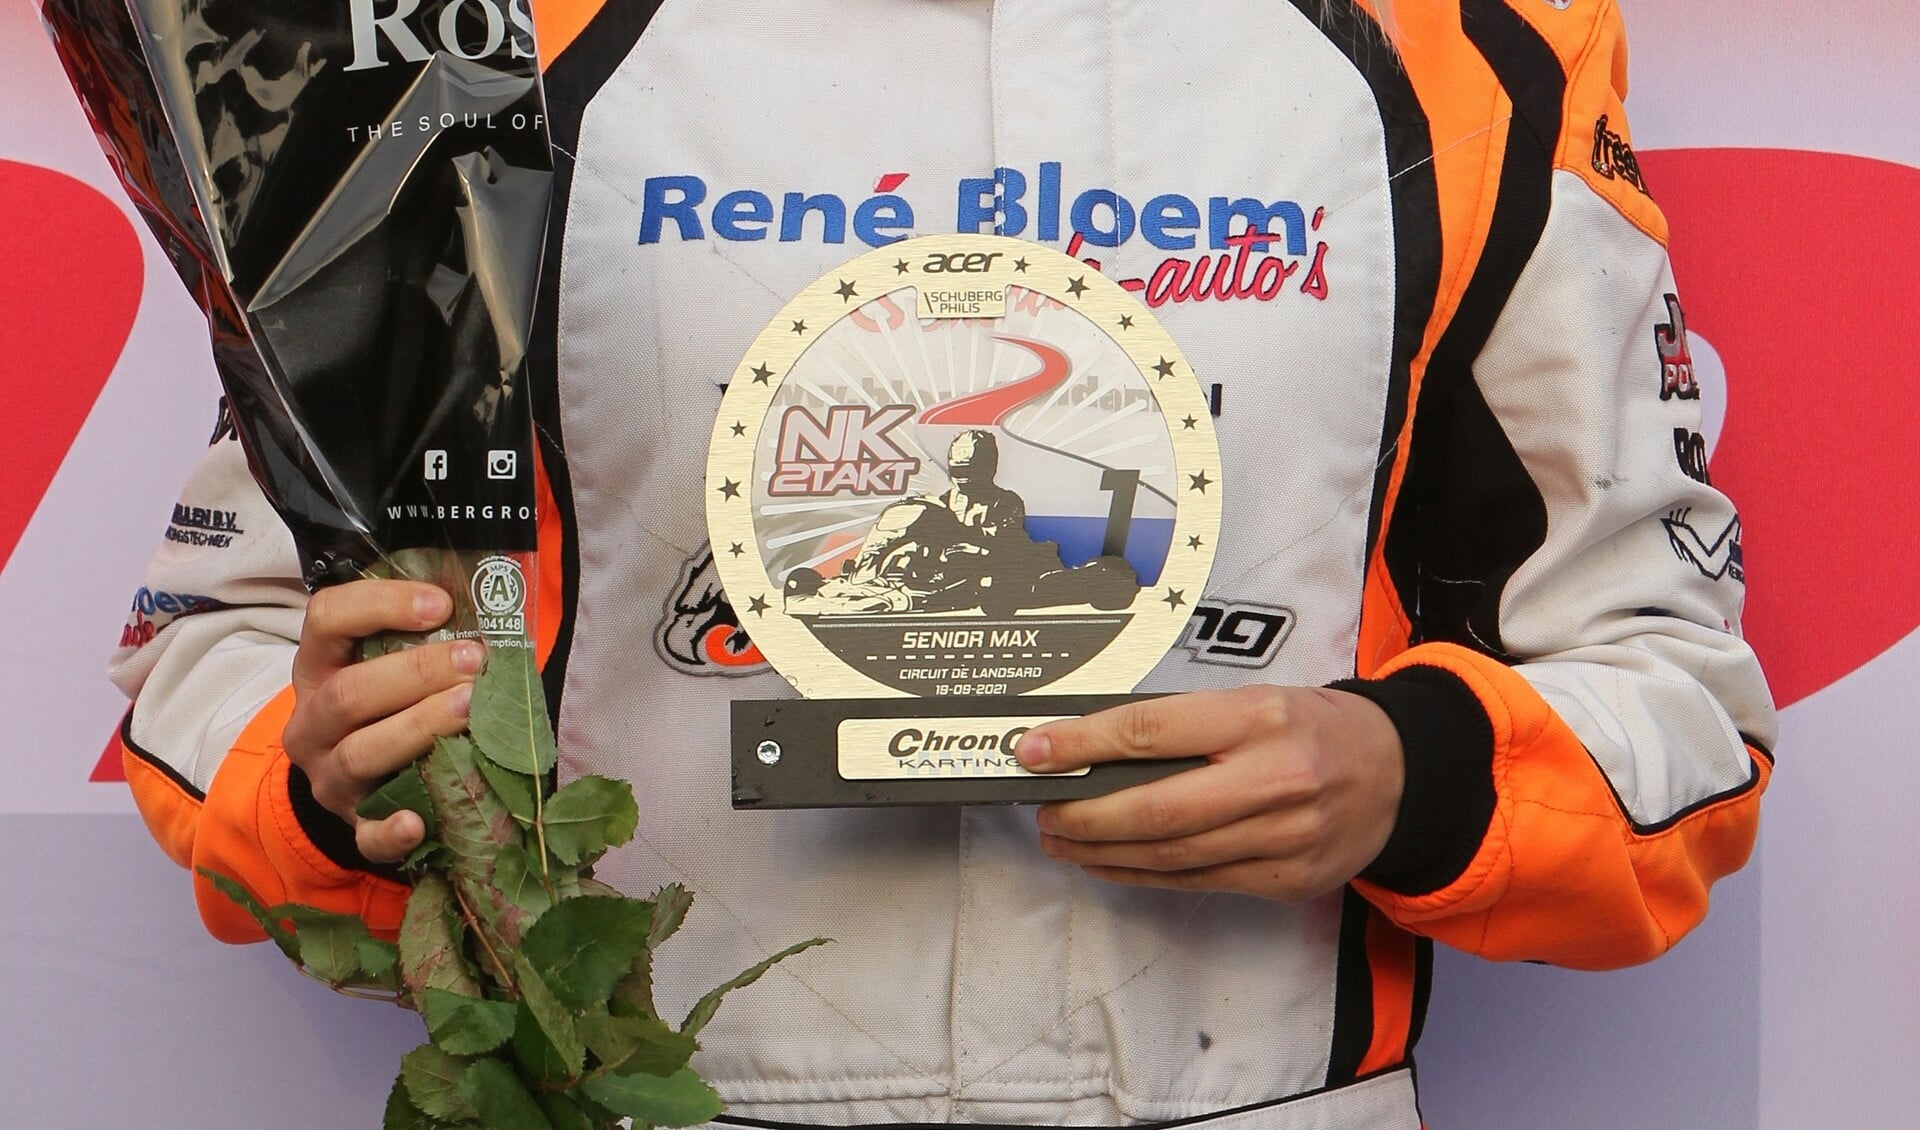 Luna Bloem in de prijzen. Foto: Bas Kaligis/RaceXpress.nl